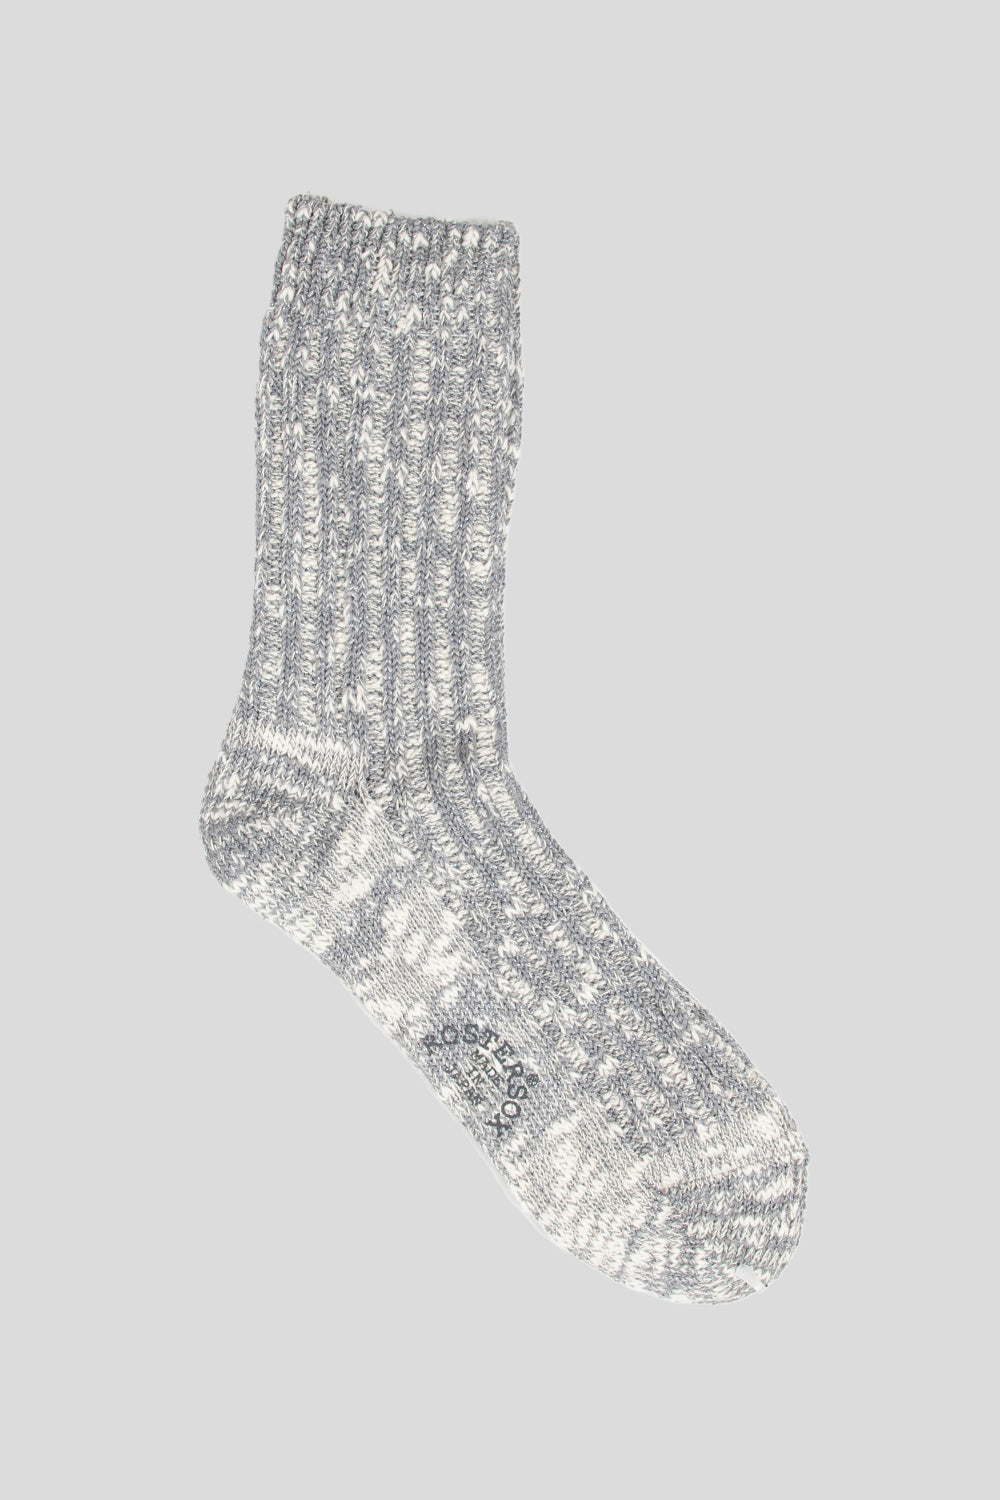 Rostersox P Slub Socks in Grey